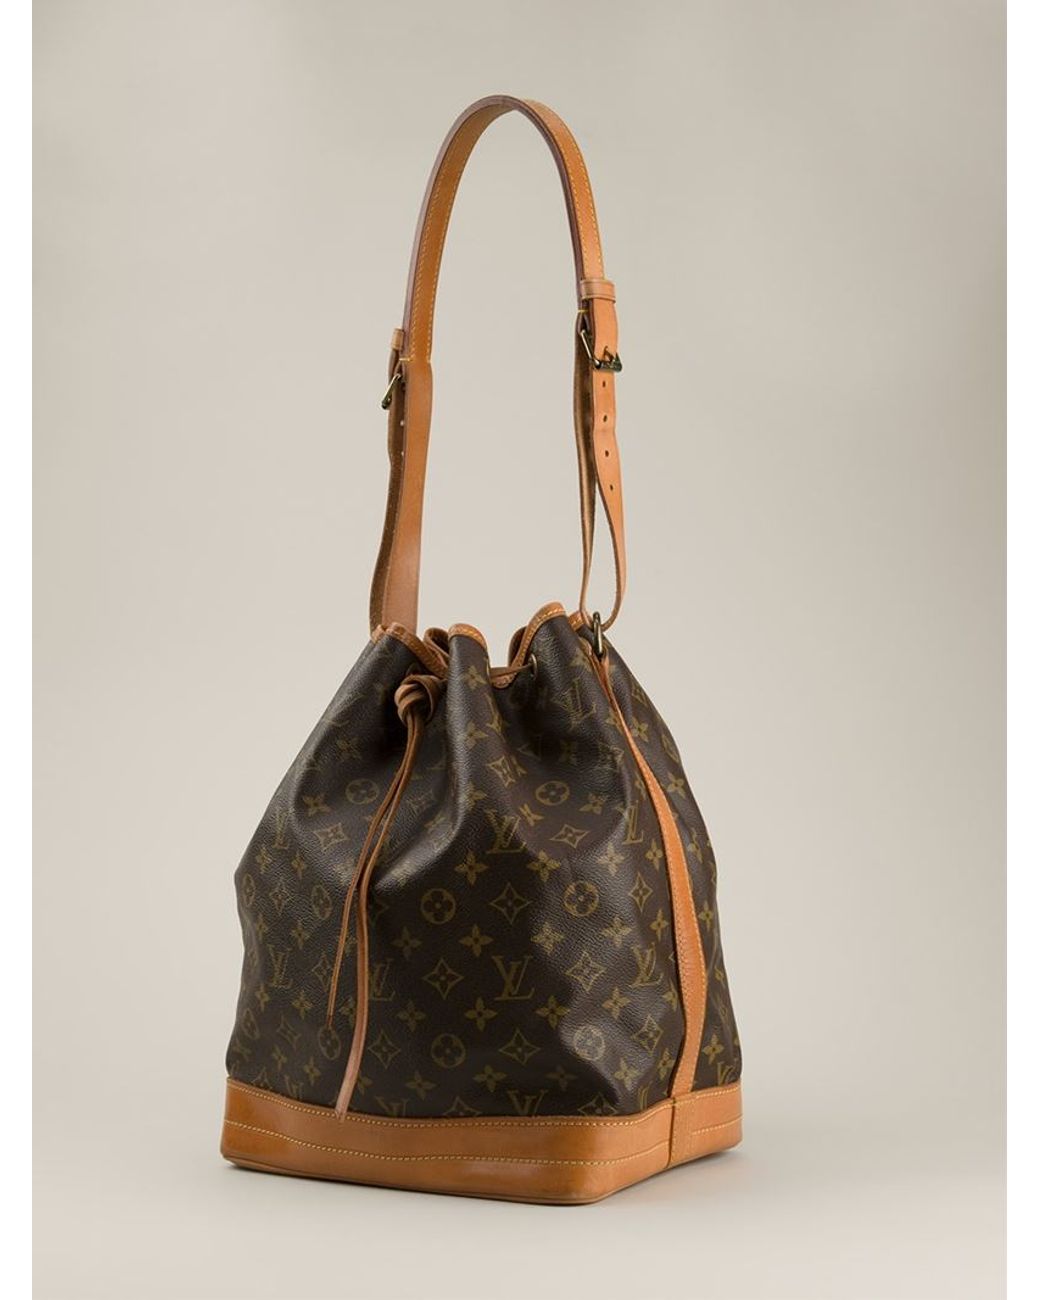 My New Old Everyday Bag Vintage Louis Vuitton Noé  Cheap louis vuitton  handbags Vintage lv bag Louis vuitton handbags crossbody